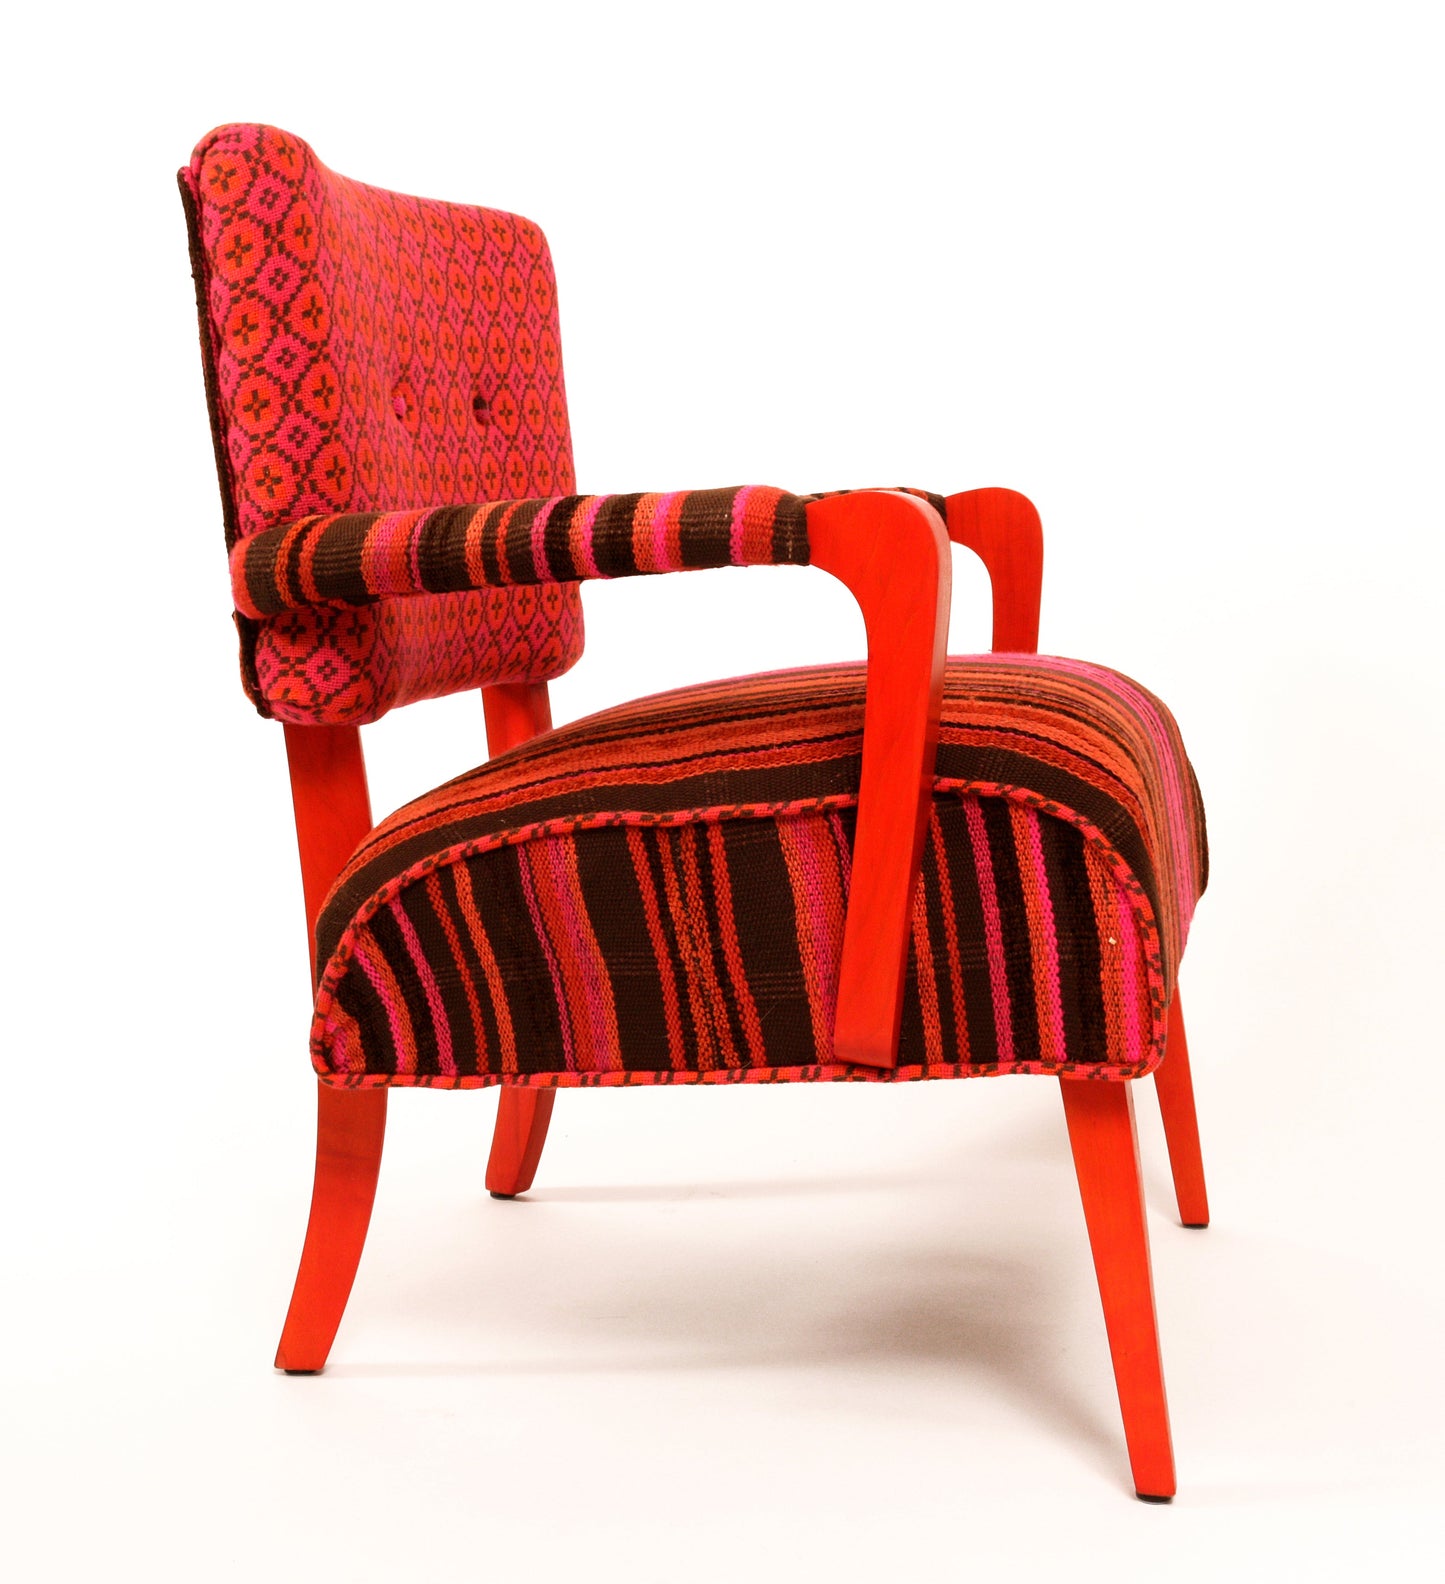 Colourful Vintage Arm Chair